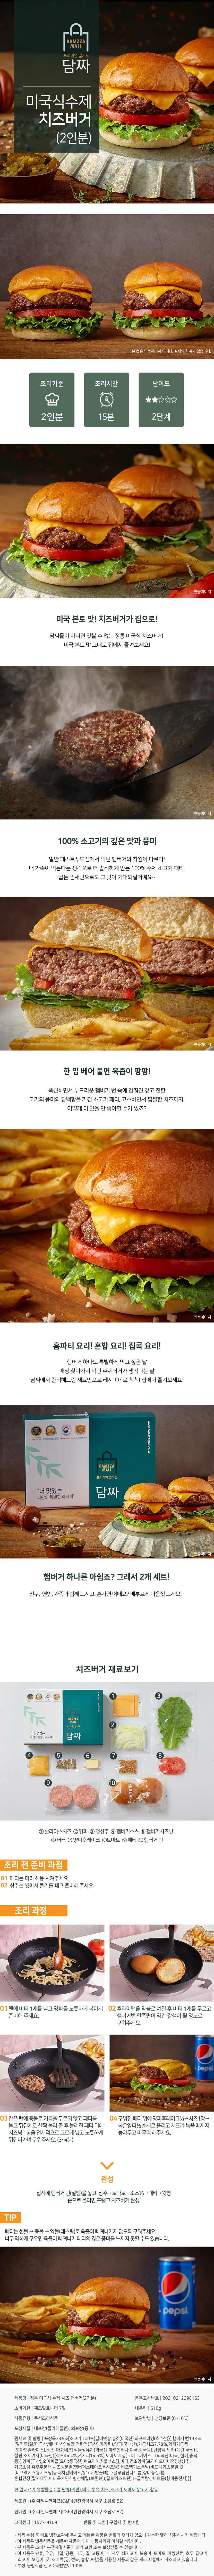 2_burger.jpg